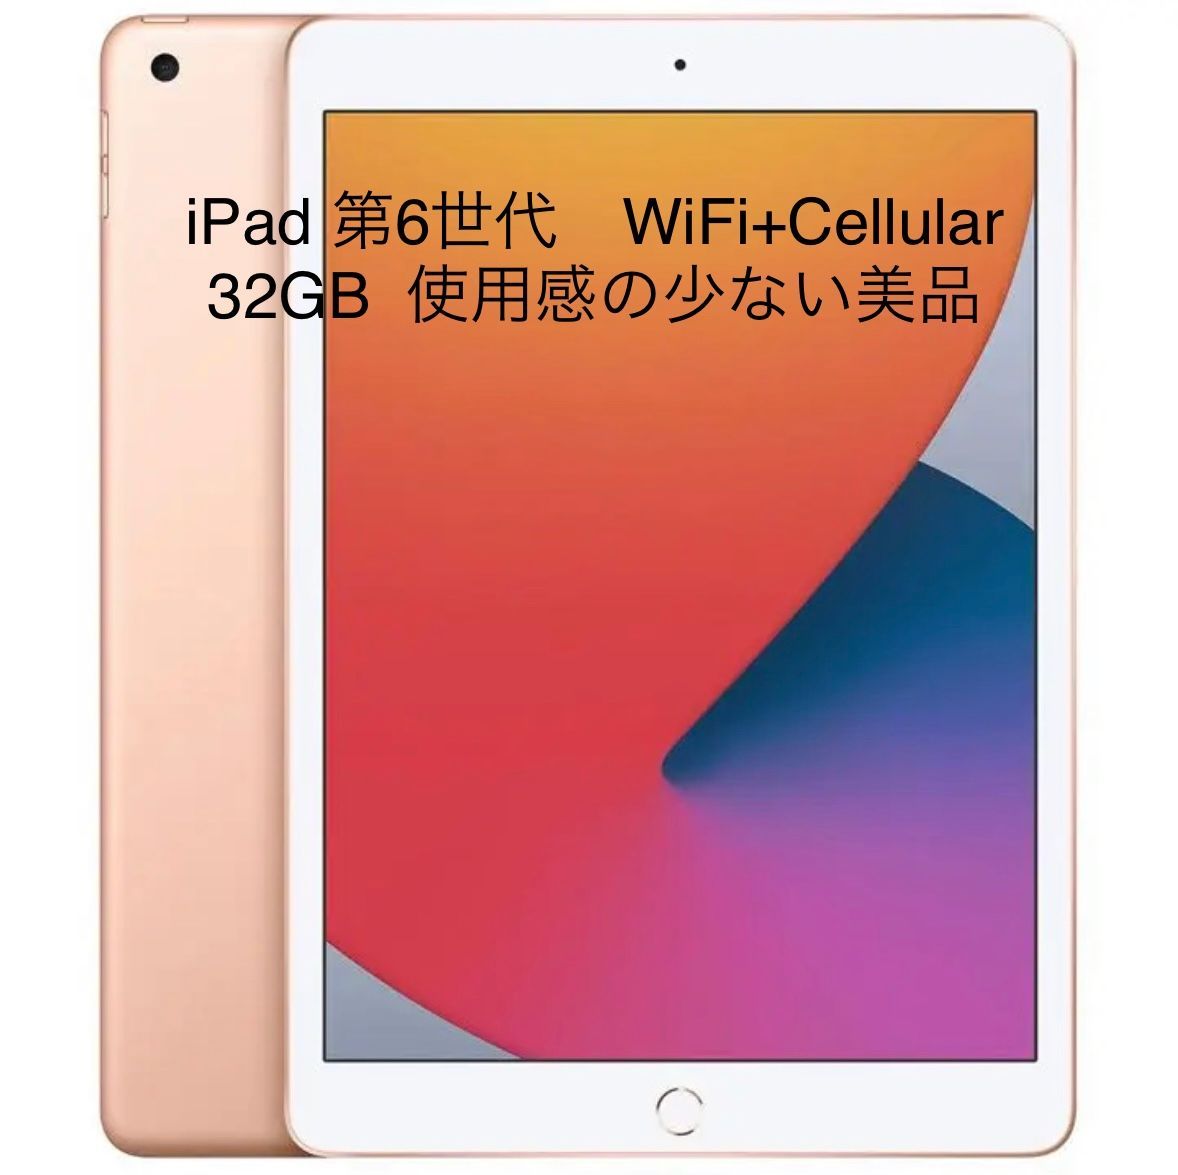 美品 iPad mini4 Wi-Fi Cellular 32GB Gold - www.sorbillomenu.com